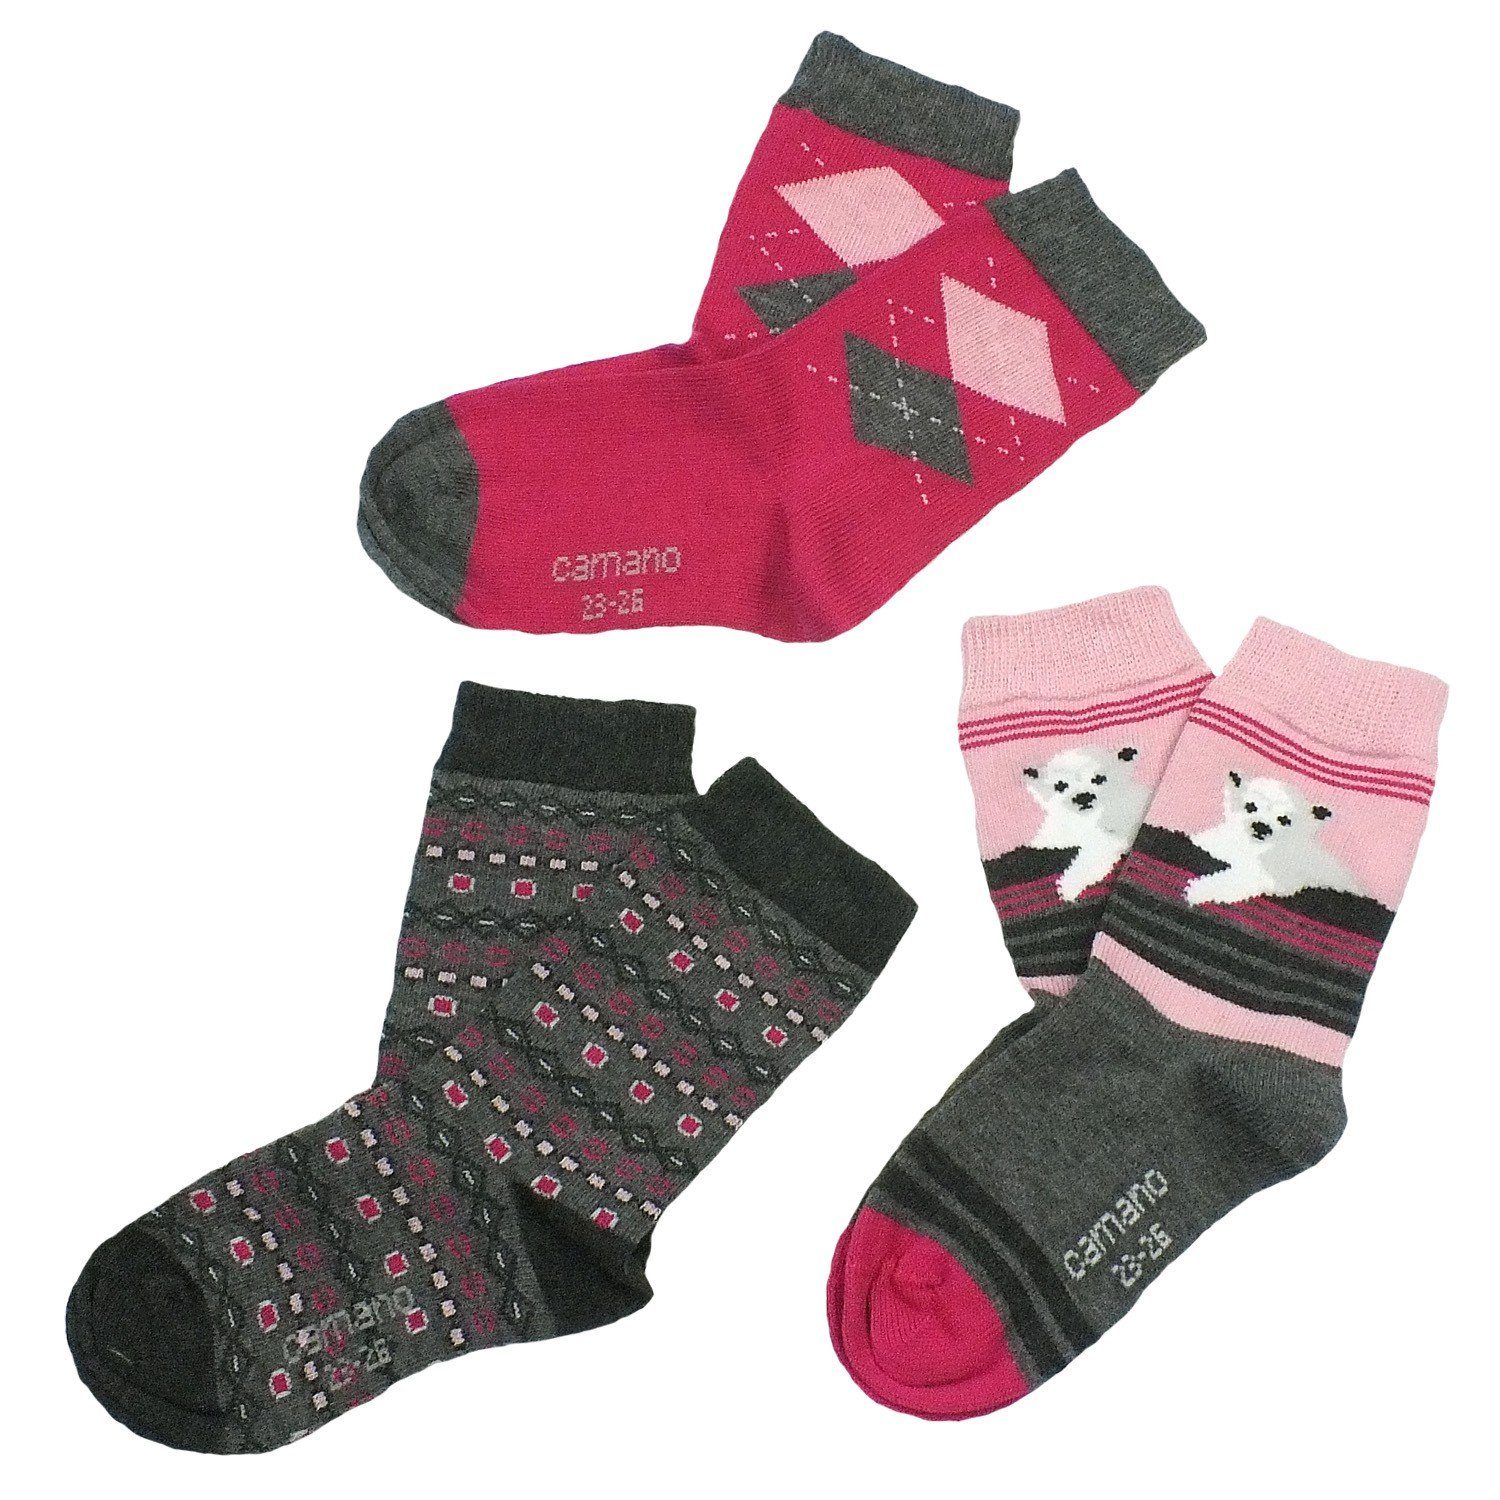 Camano Langsocken Paar) 3 CA3821 Jungen Kinder Socken, mit Baumwolle, Kindersocken (Packung, & Mädchen